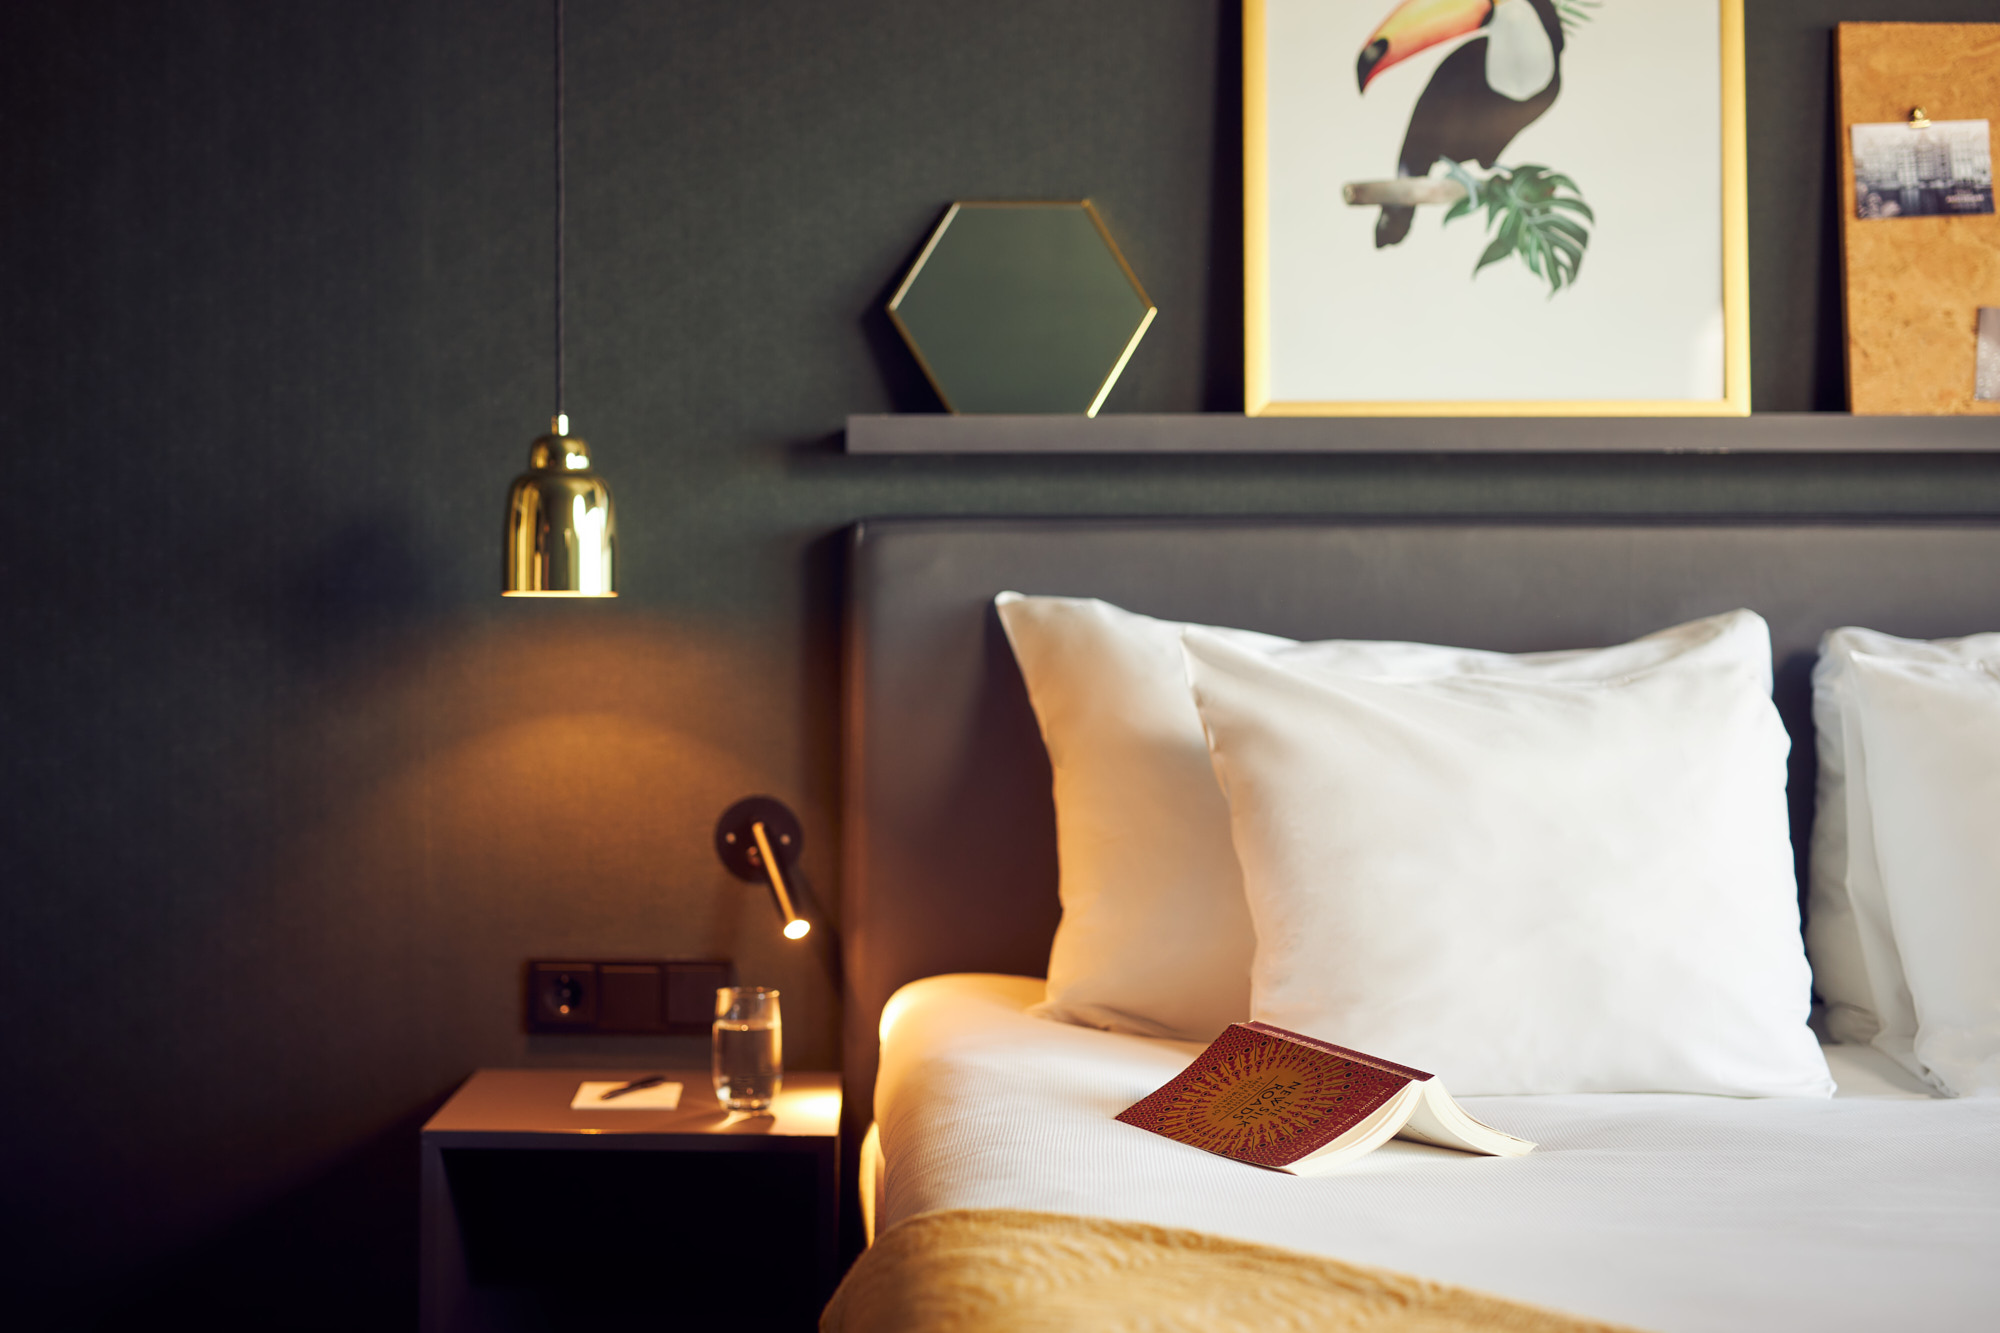 Van der Valk Hotel Amsterdam Amstel <br/>91.31 ew <br/> <a href='http://vakantieoplossing.nl/outpage/?id=ba561adabb1612e52918e765e41a25f7' target='_blank'>View Details</a>